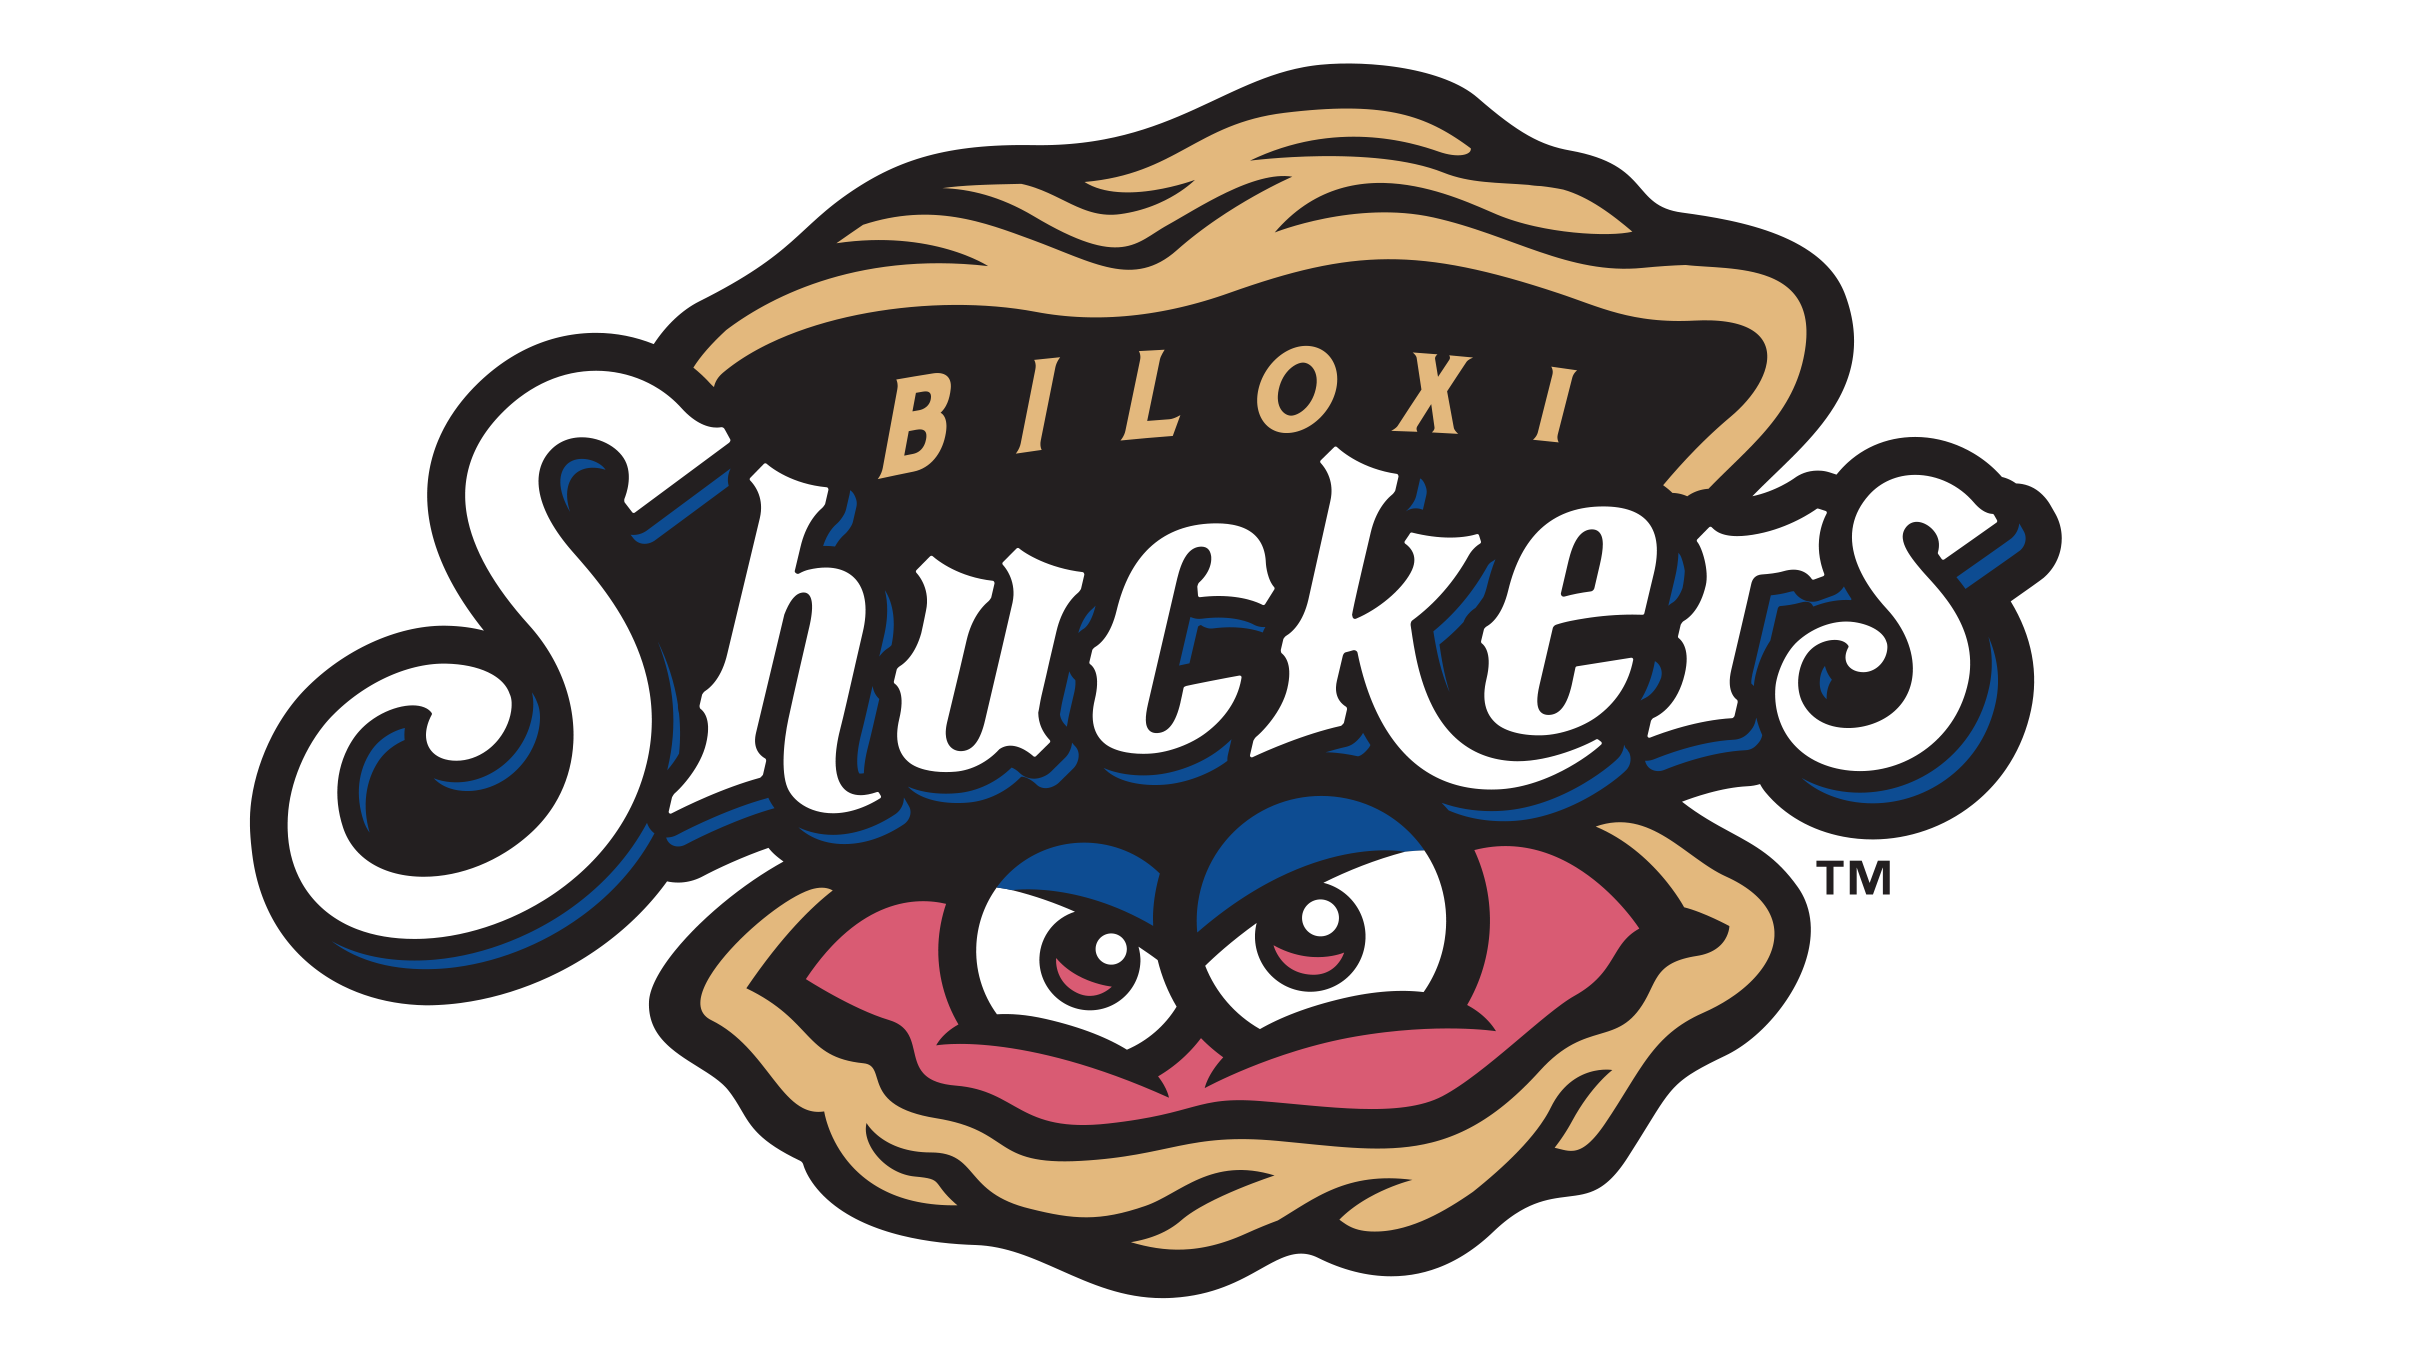 Biloxi Shuckers vs. Montgomery Biscuits